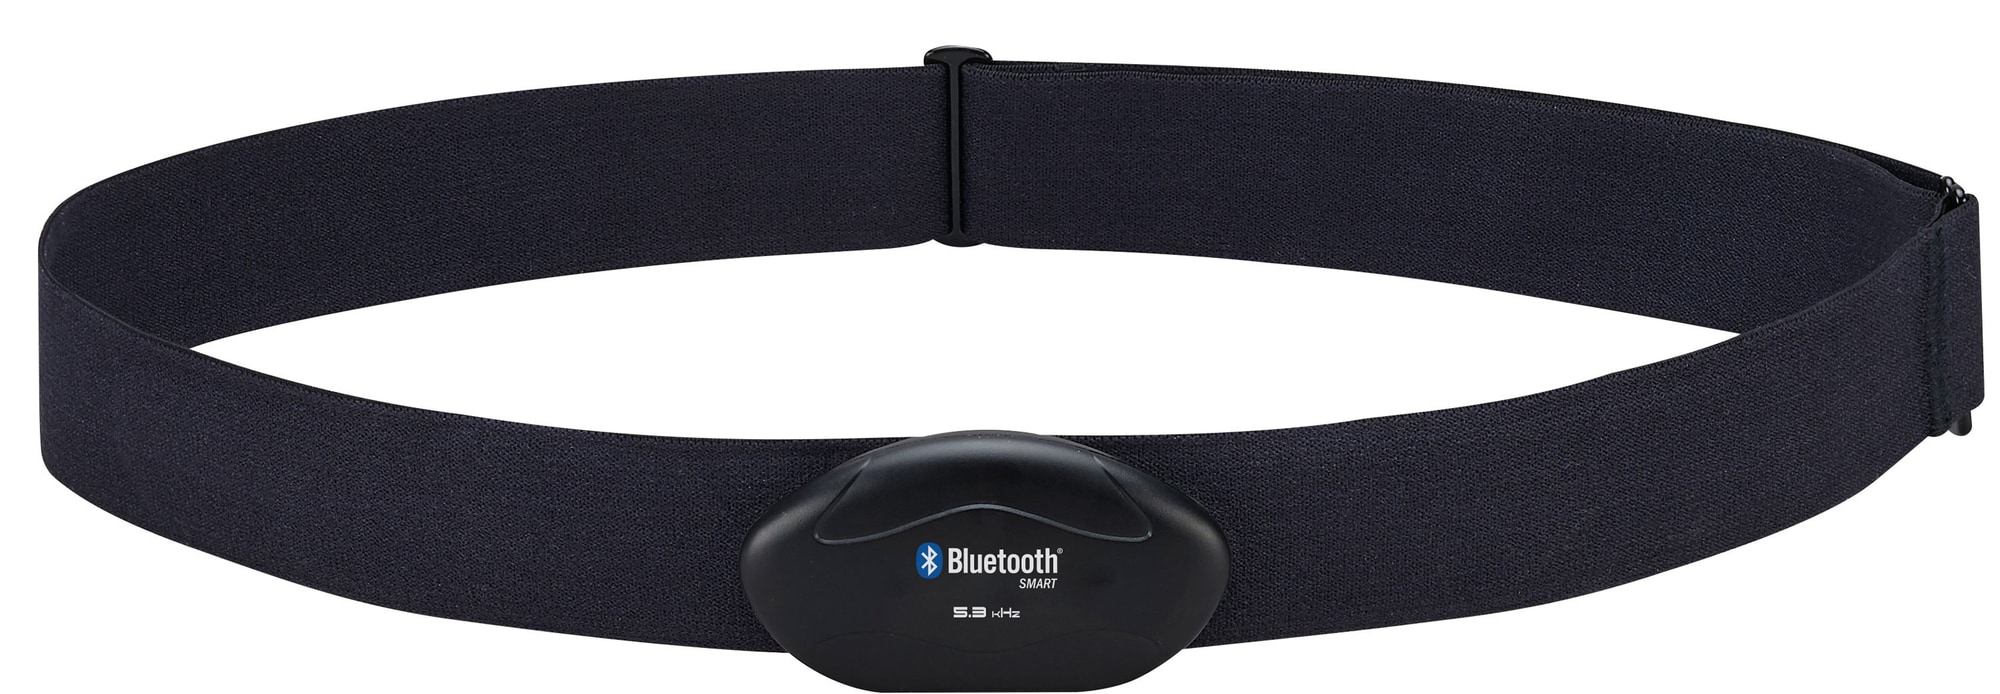 Goji Bluetooth pulsbælte